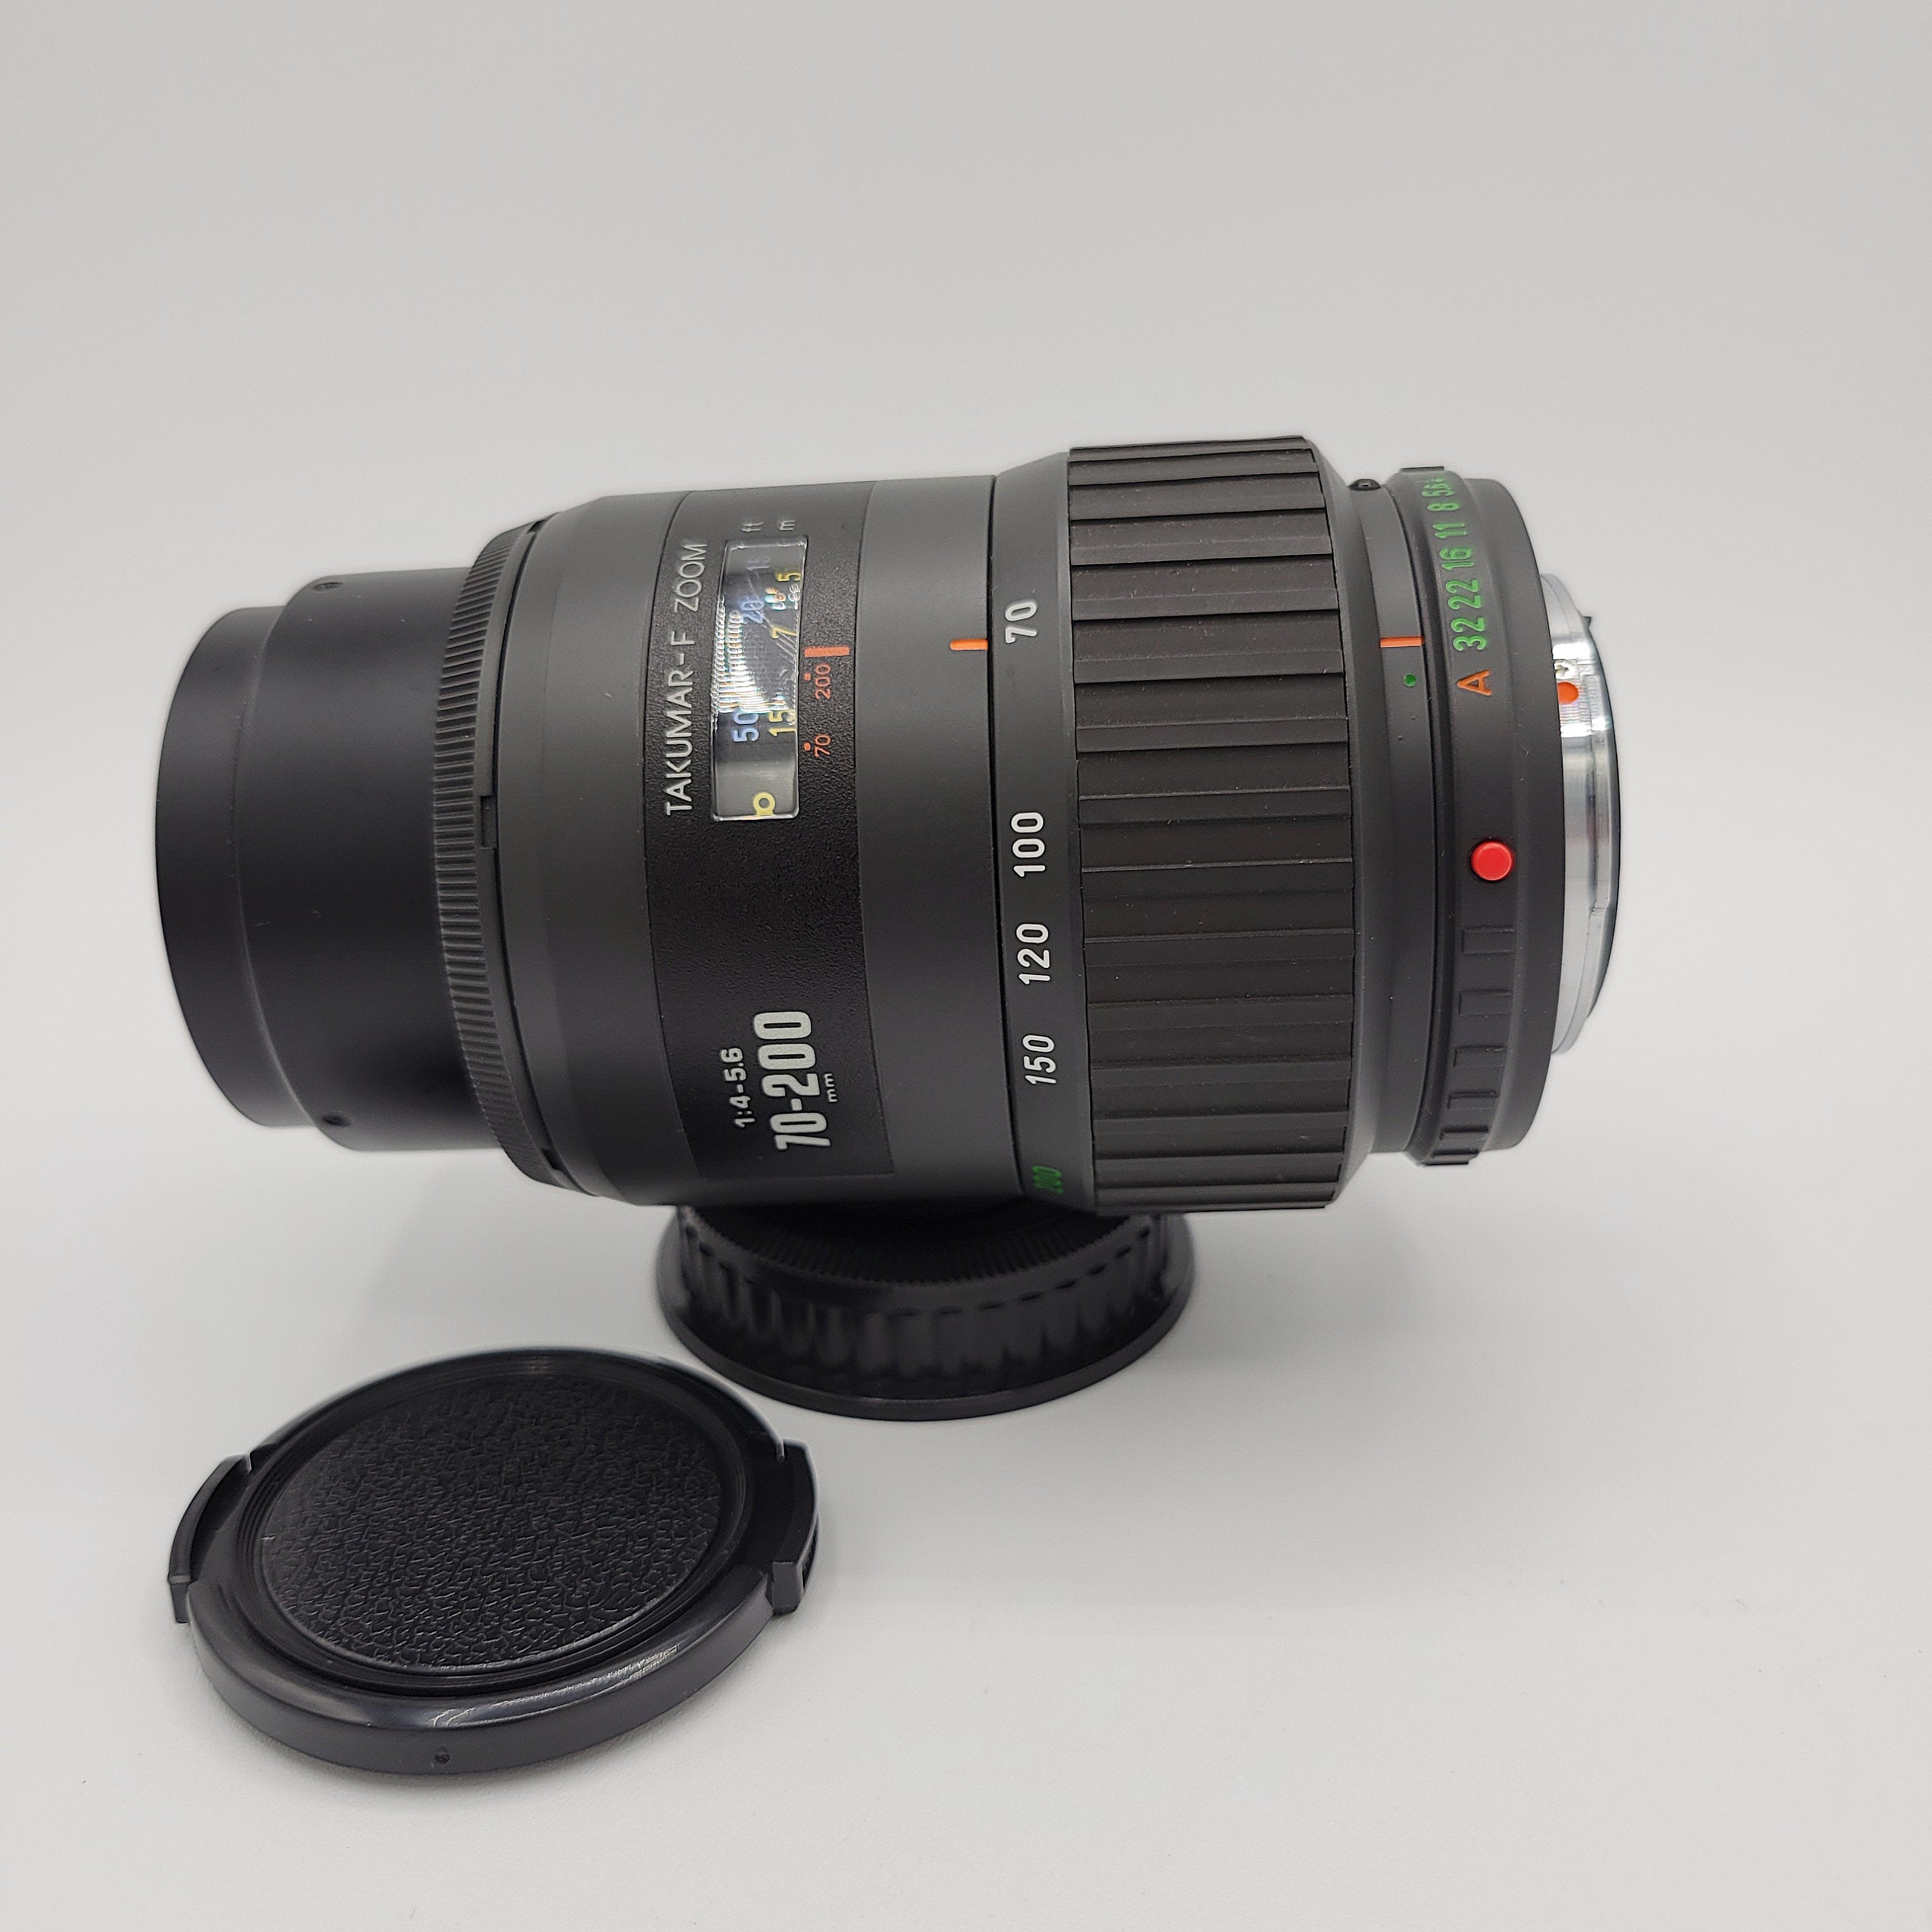 Takumar-F(Pentax) 70-200mm f/4-5.6 Autofocus Zoom Lens - AMAZING Condition  - For 35mm Film/Digital Cameras